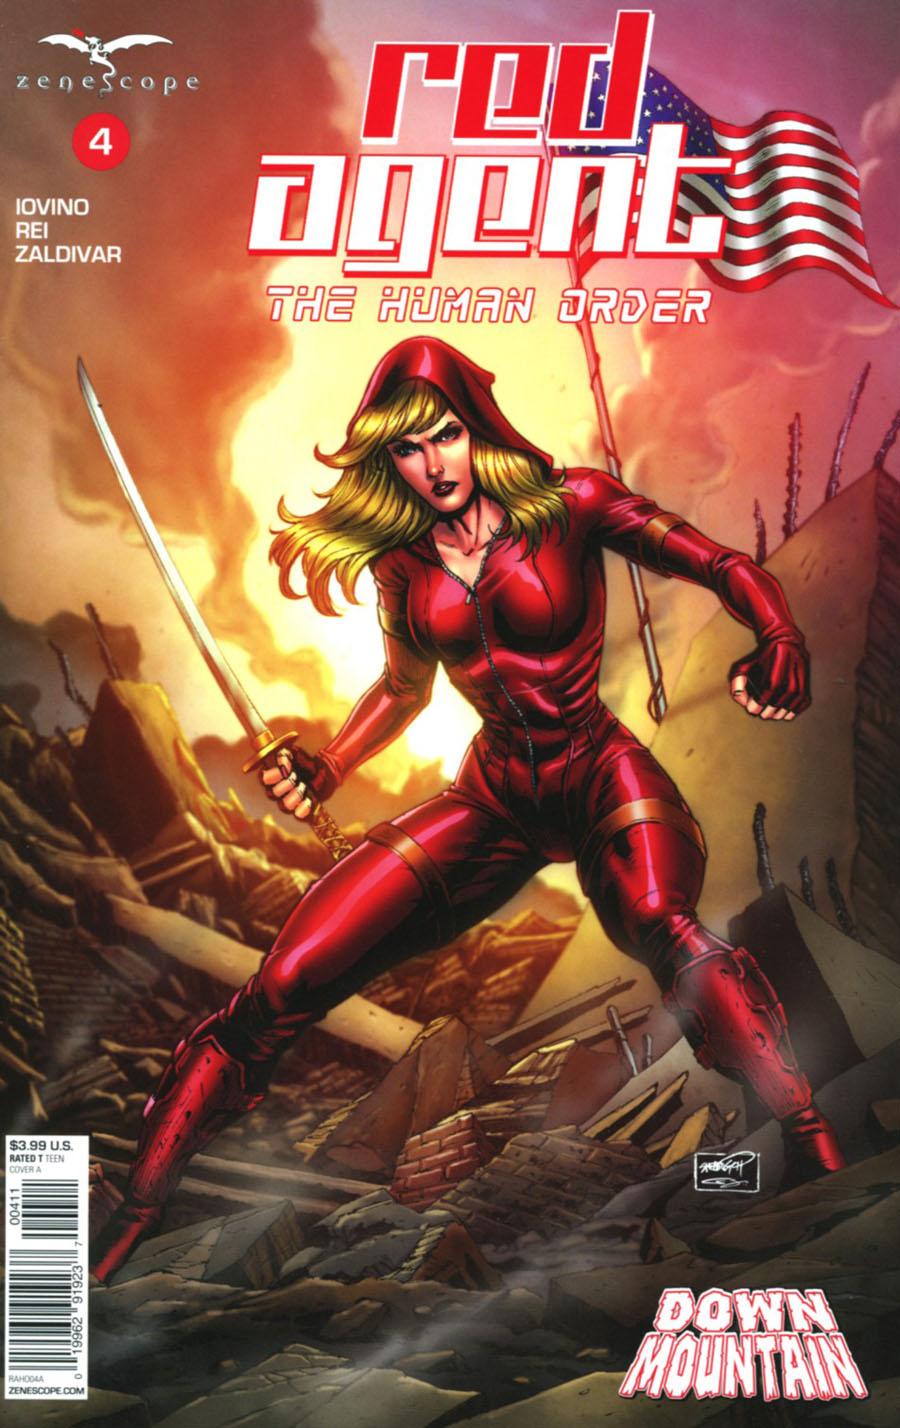 Grimm Fairy Tales Presents Red Agent Human Order Vol. 1 #4